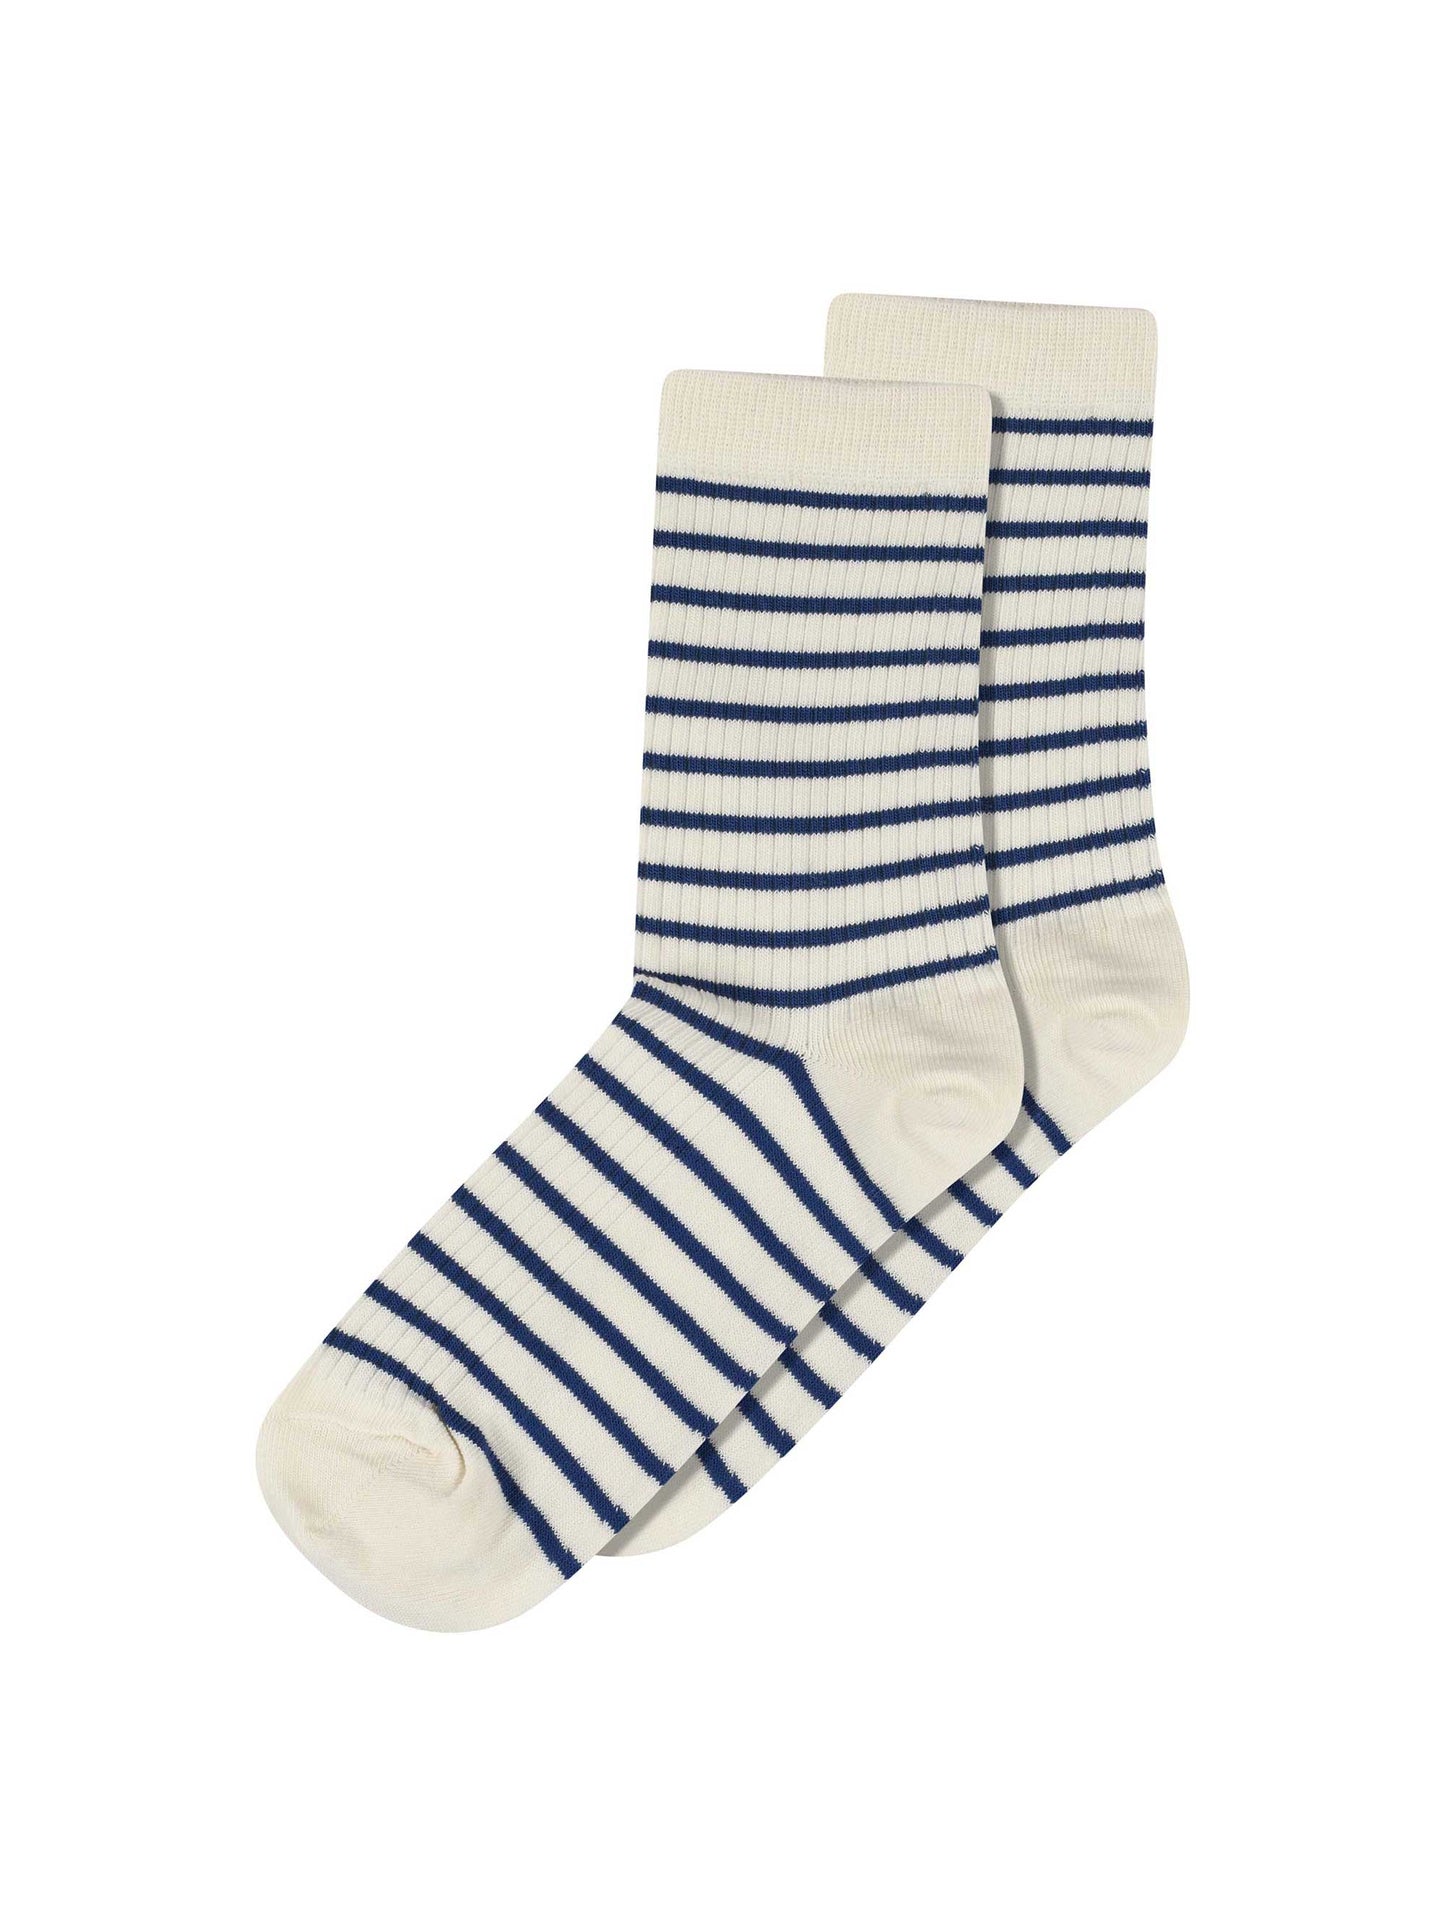 Striking Stripes Super Cosy Cuff Socks SL442 – Jess and Lou